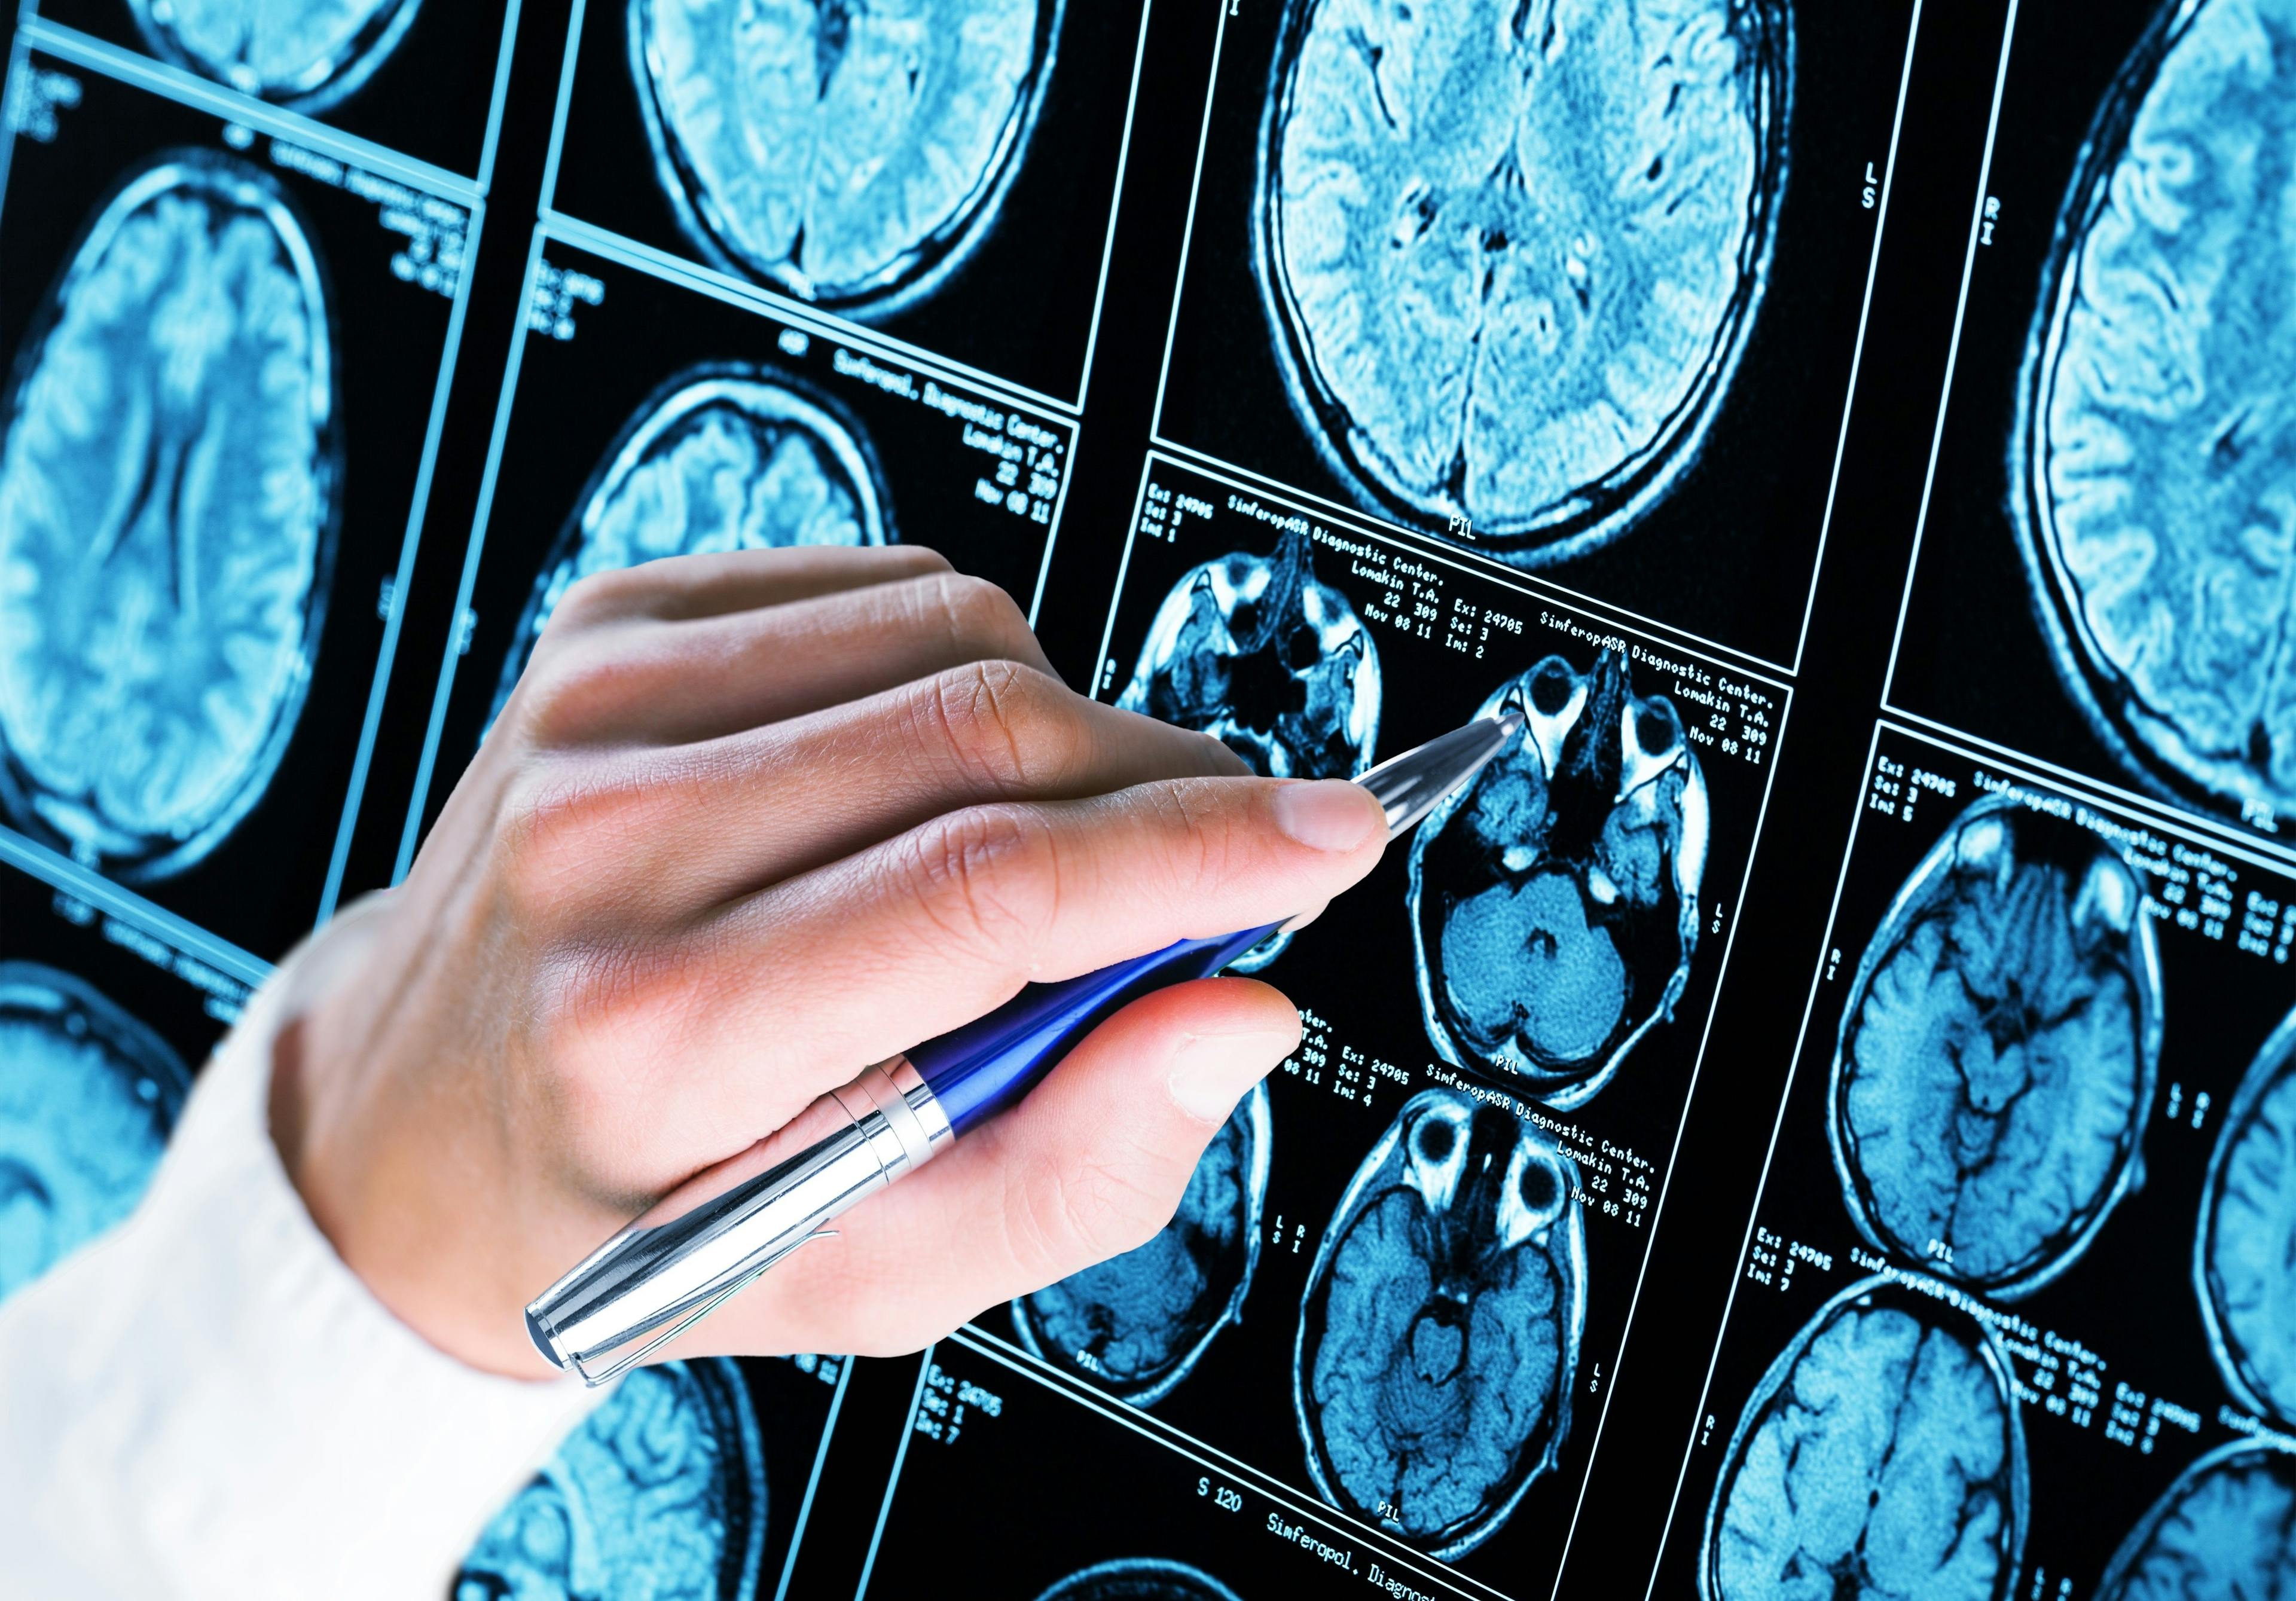 Health care worker observing brain scans -- Image credit: BillionPhotos.com | stock.adobe.com